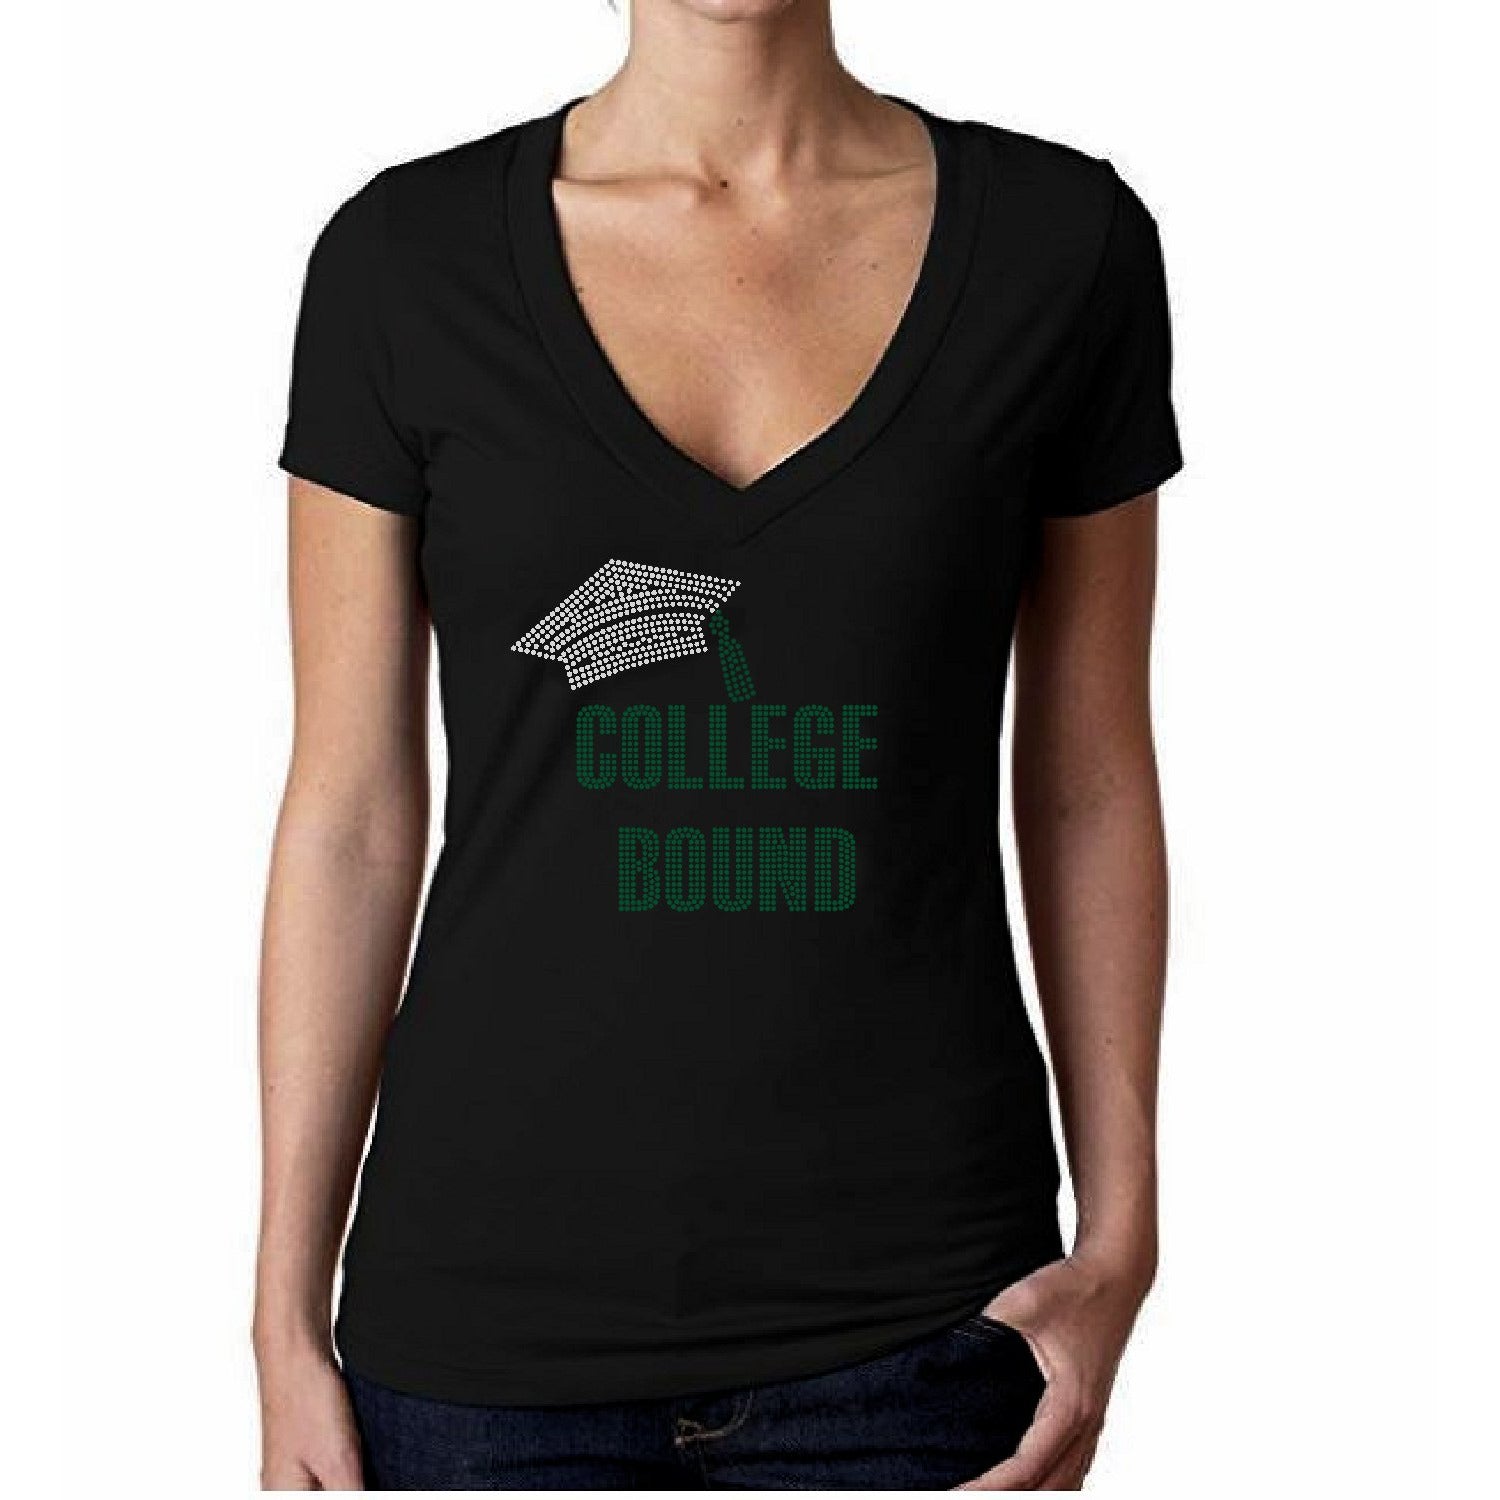 College Bound Rhinestone T-Shirt